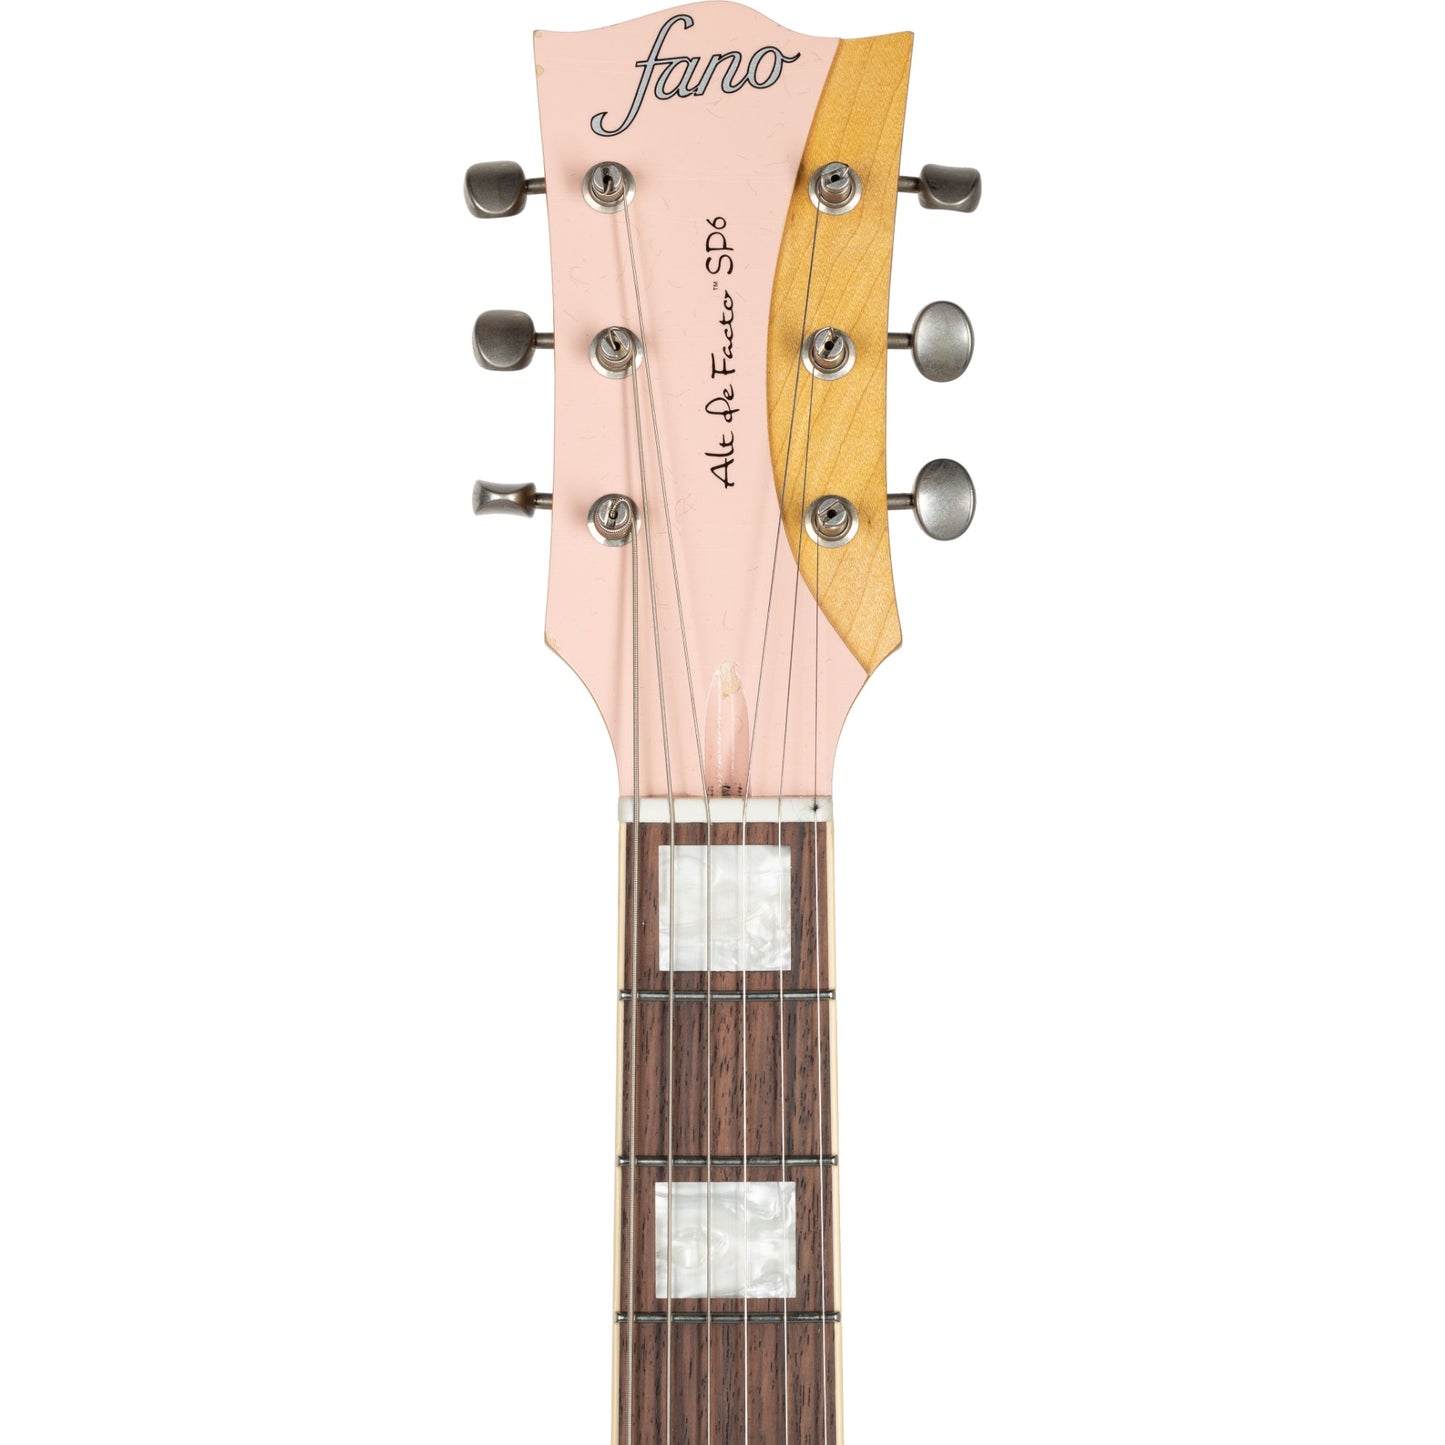 Fano SP6 Alt de Facto 6-String Electric Guitar in Shell Pink